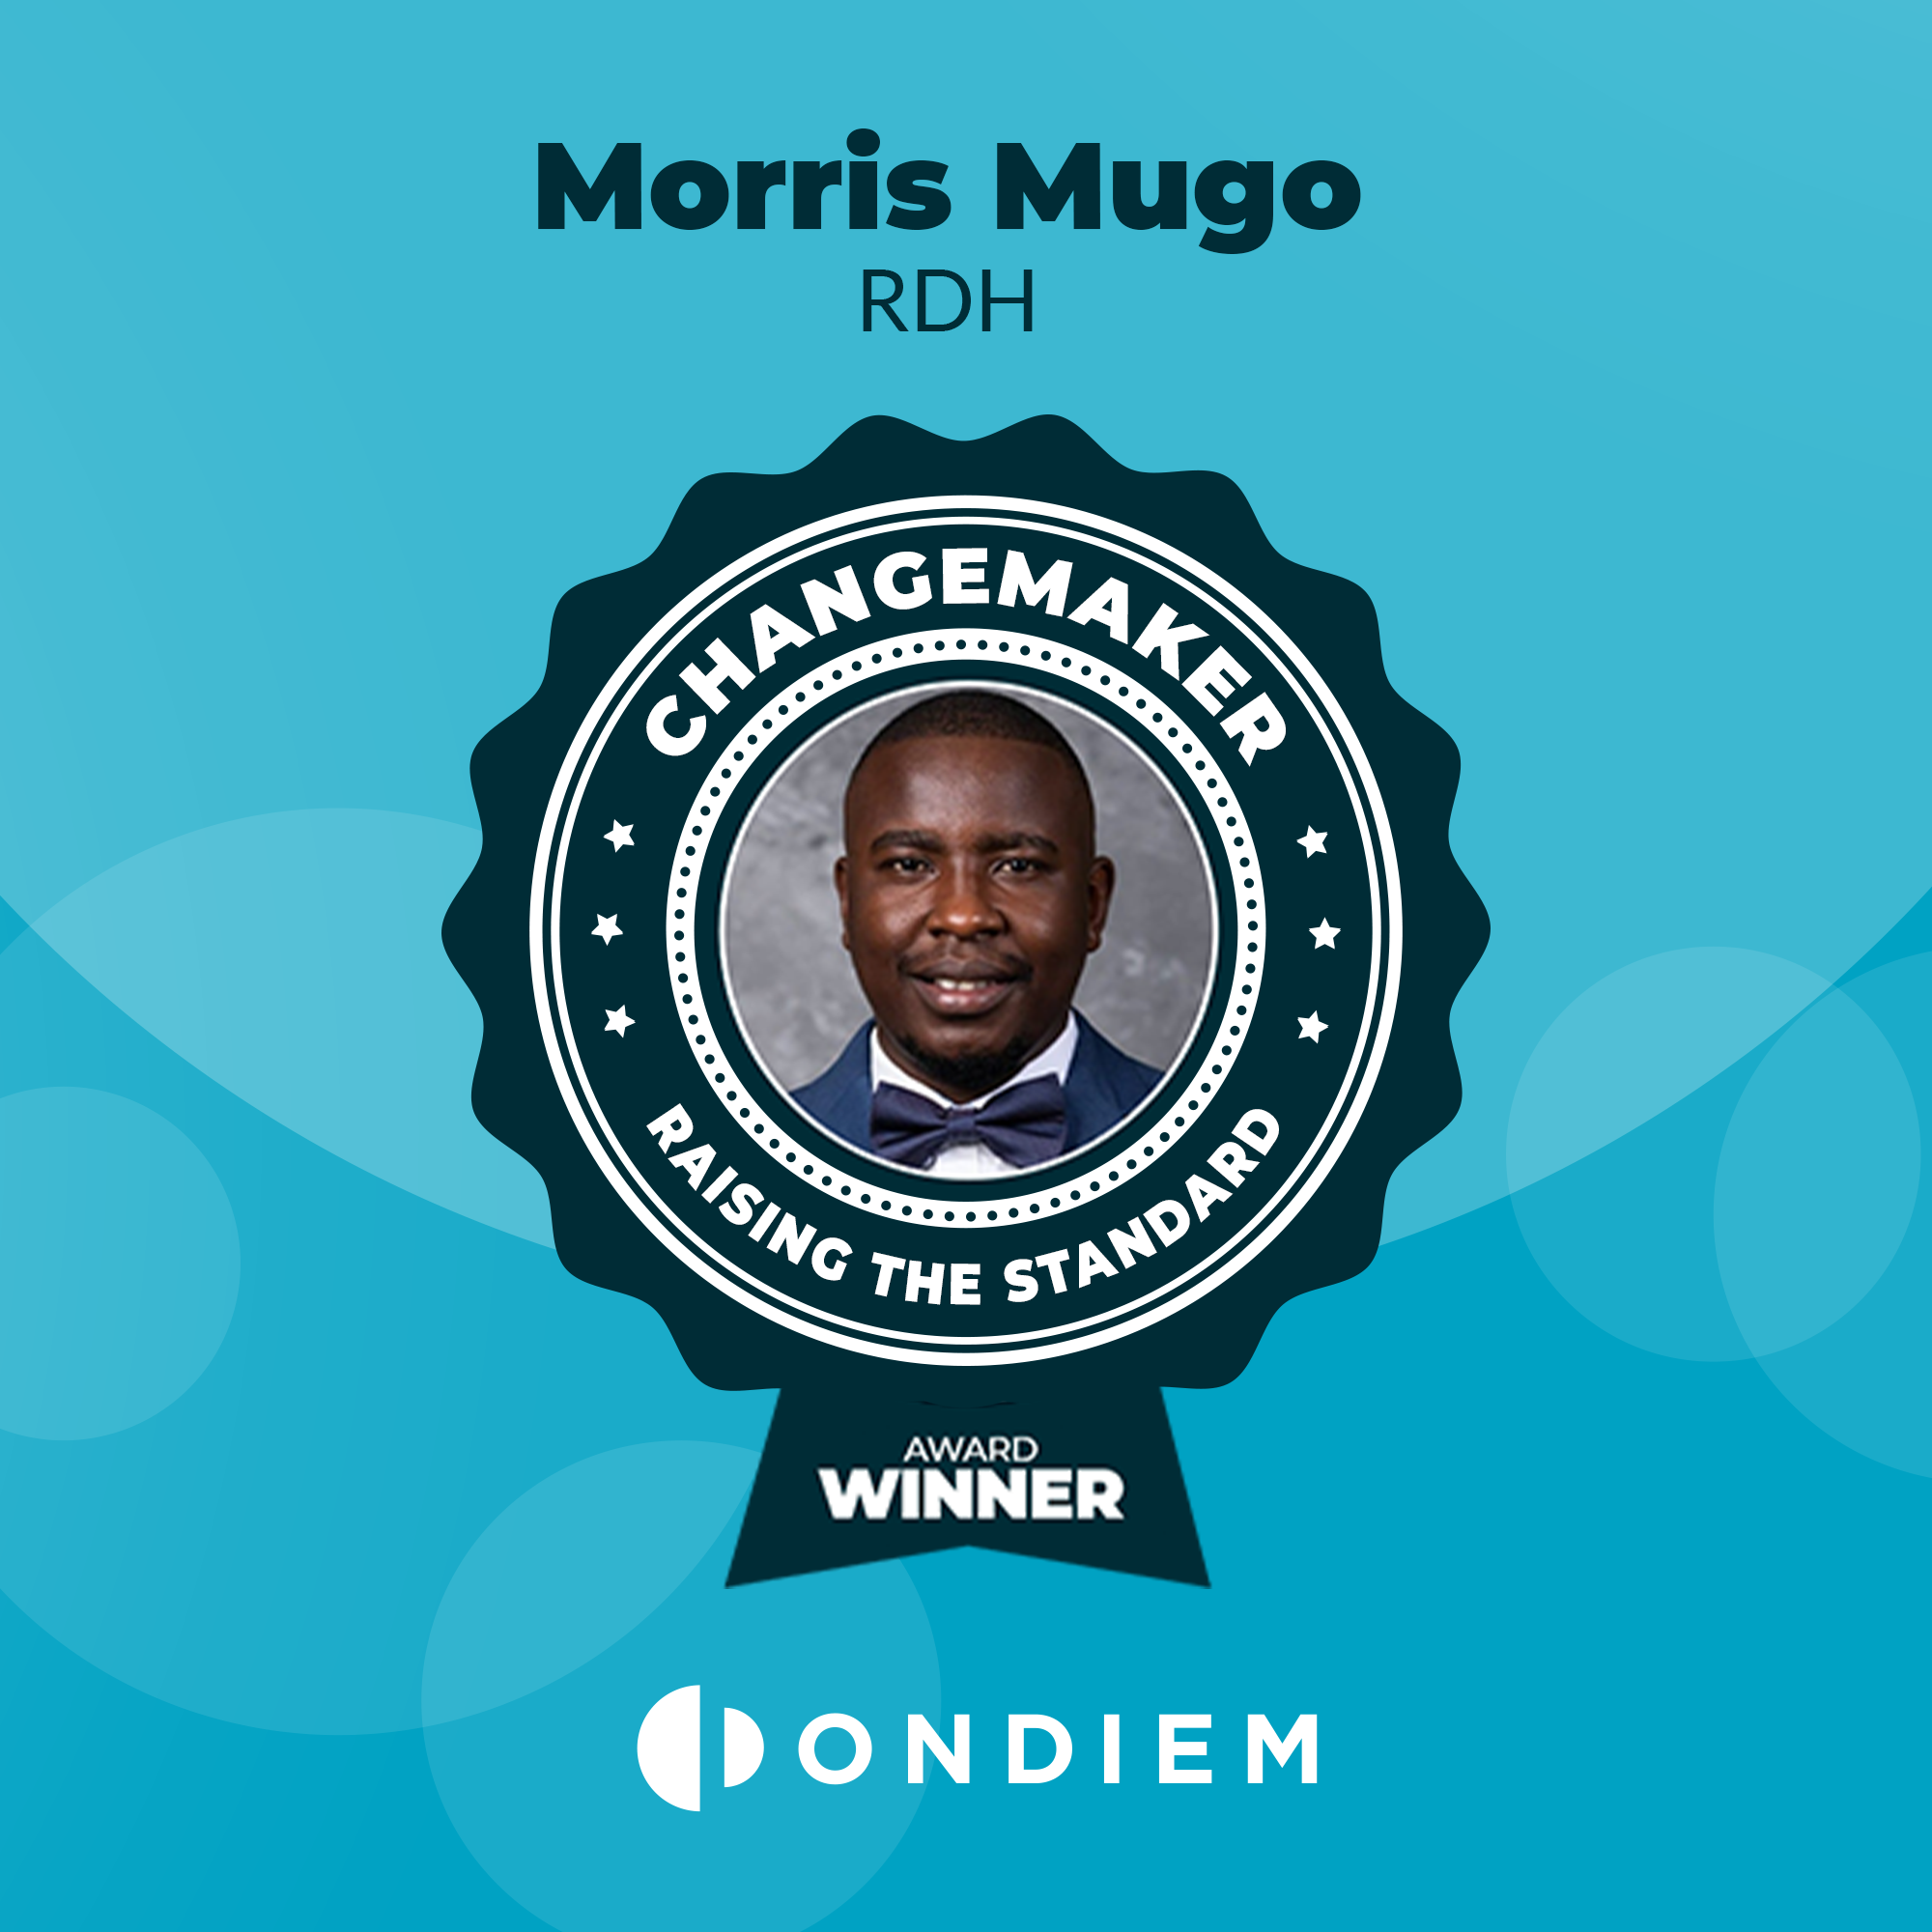 Meet Morris Mugo: The onDiem Changemaker and Nonprofit Founder Dedicated to Bringing the Dental Community Together